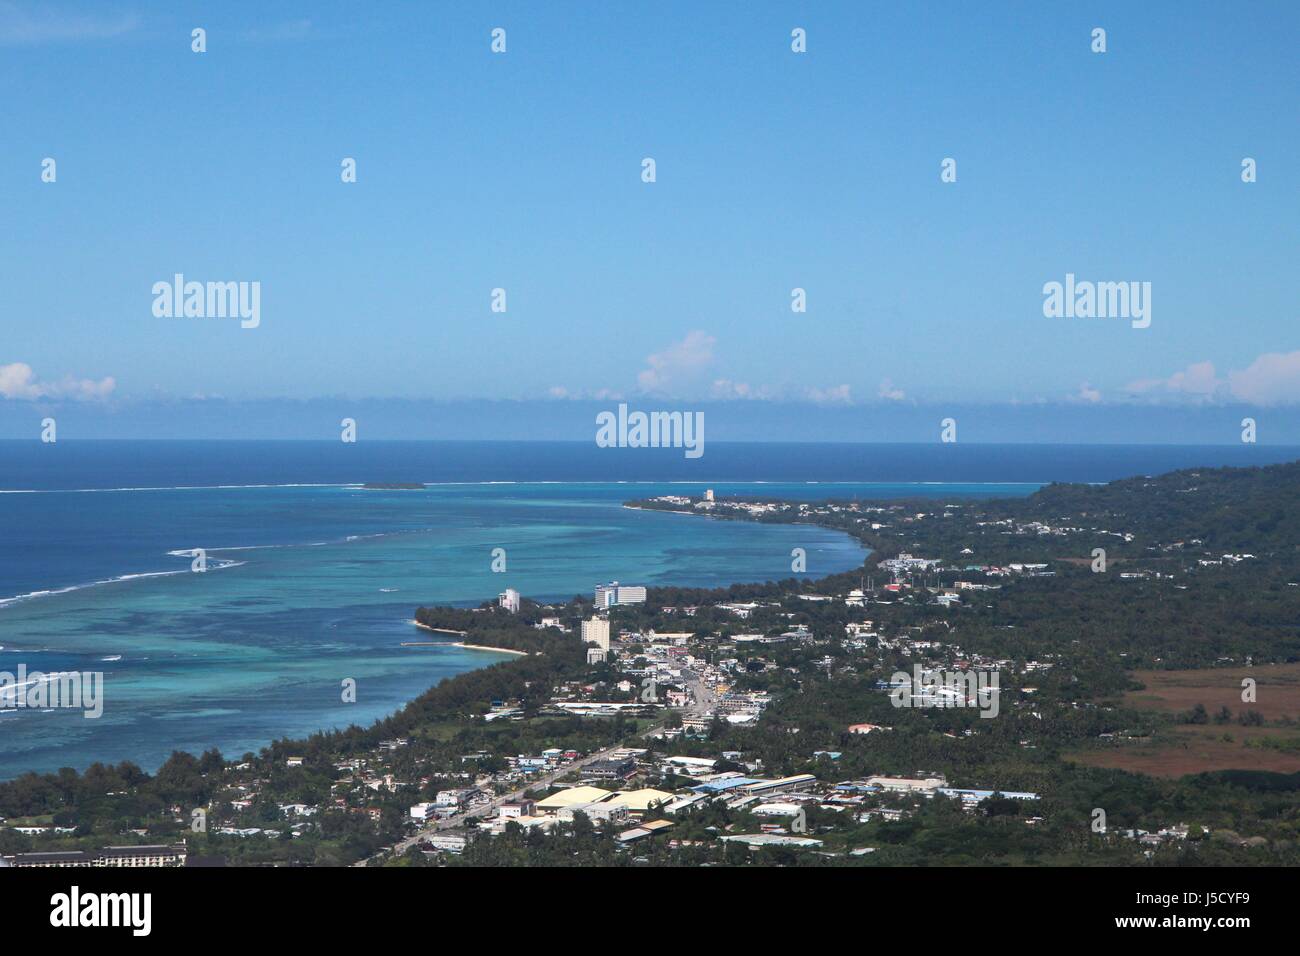 Aerial view of Saipan coast from San Antonio village to Garapan. Stock Photo